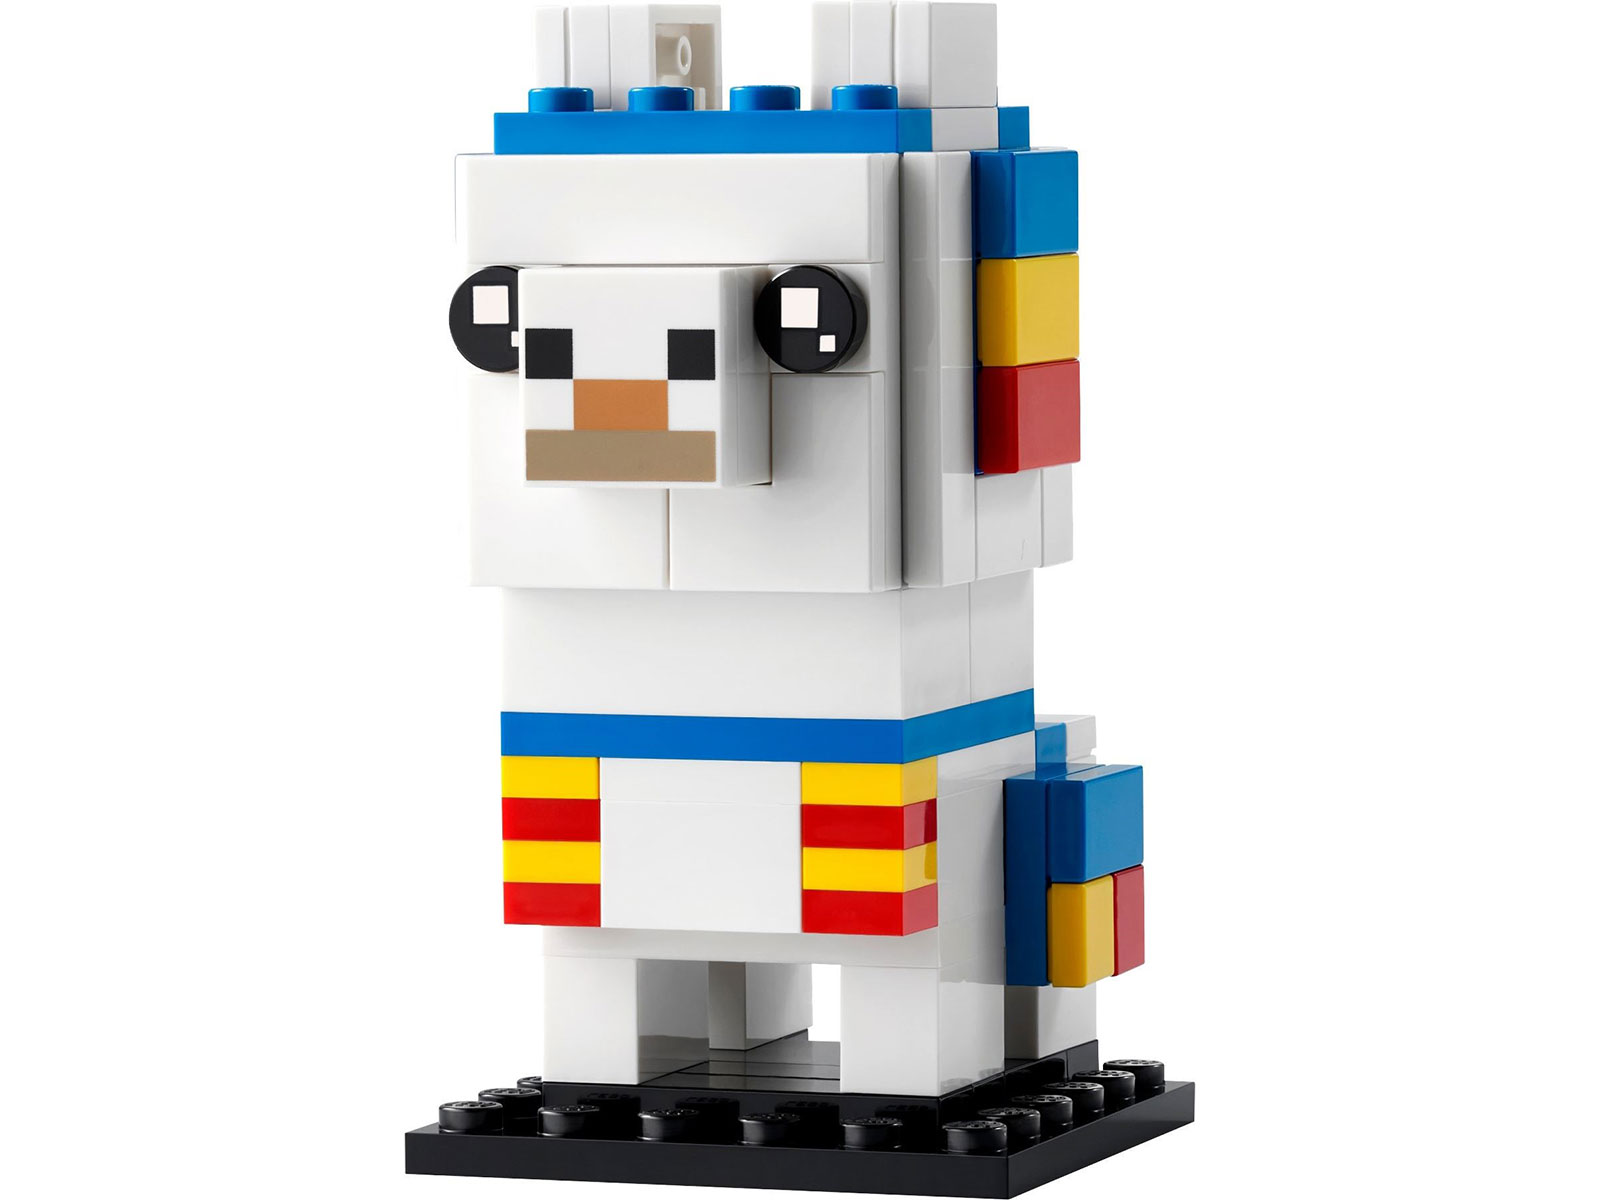 LEGO® BrickHeadz 40625 - Lama